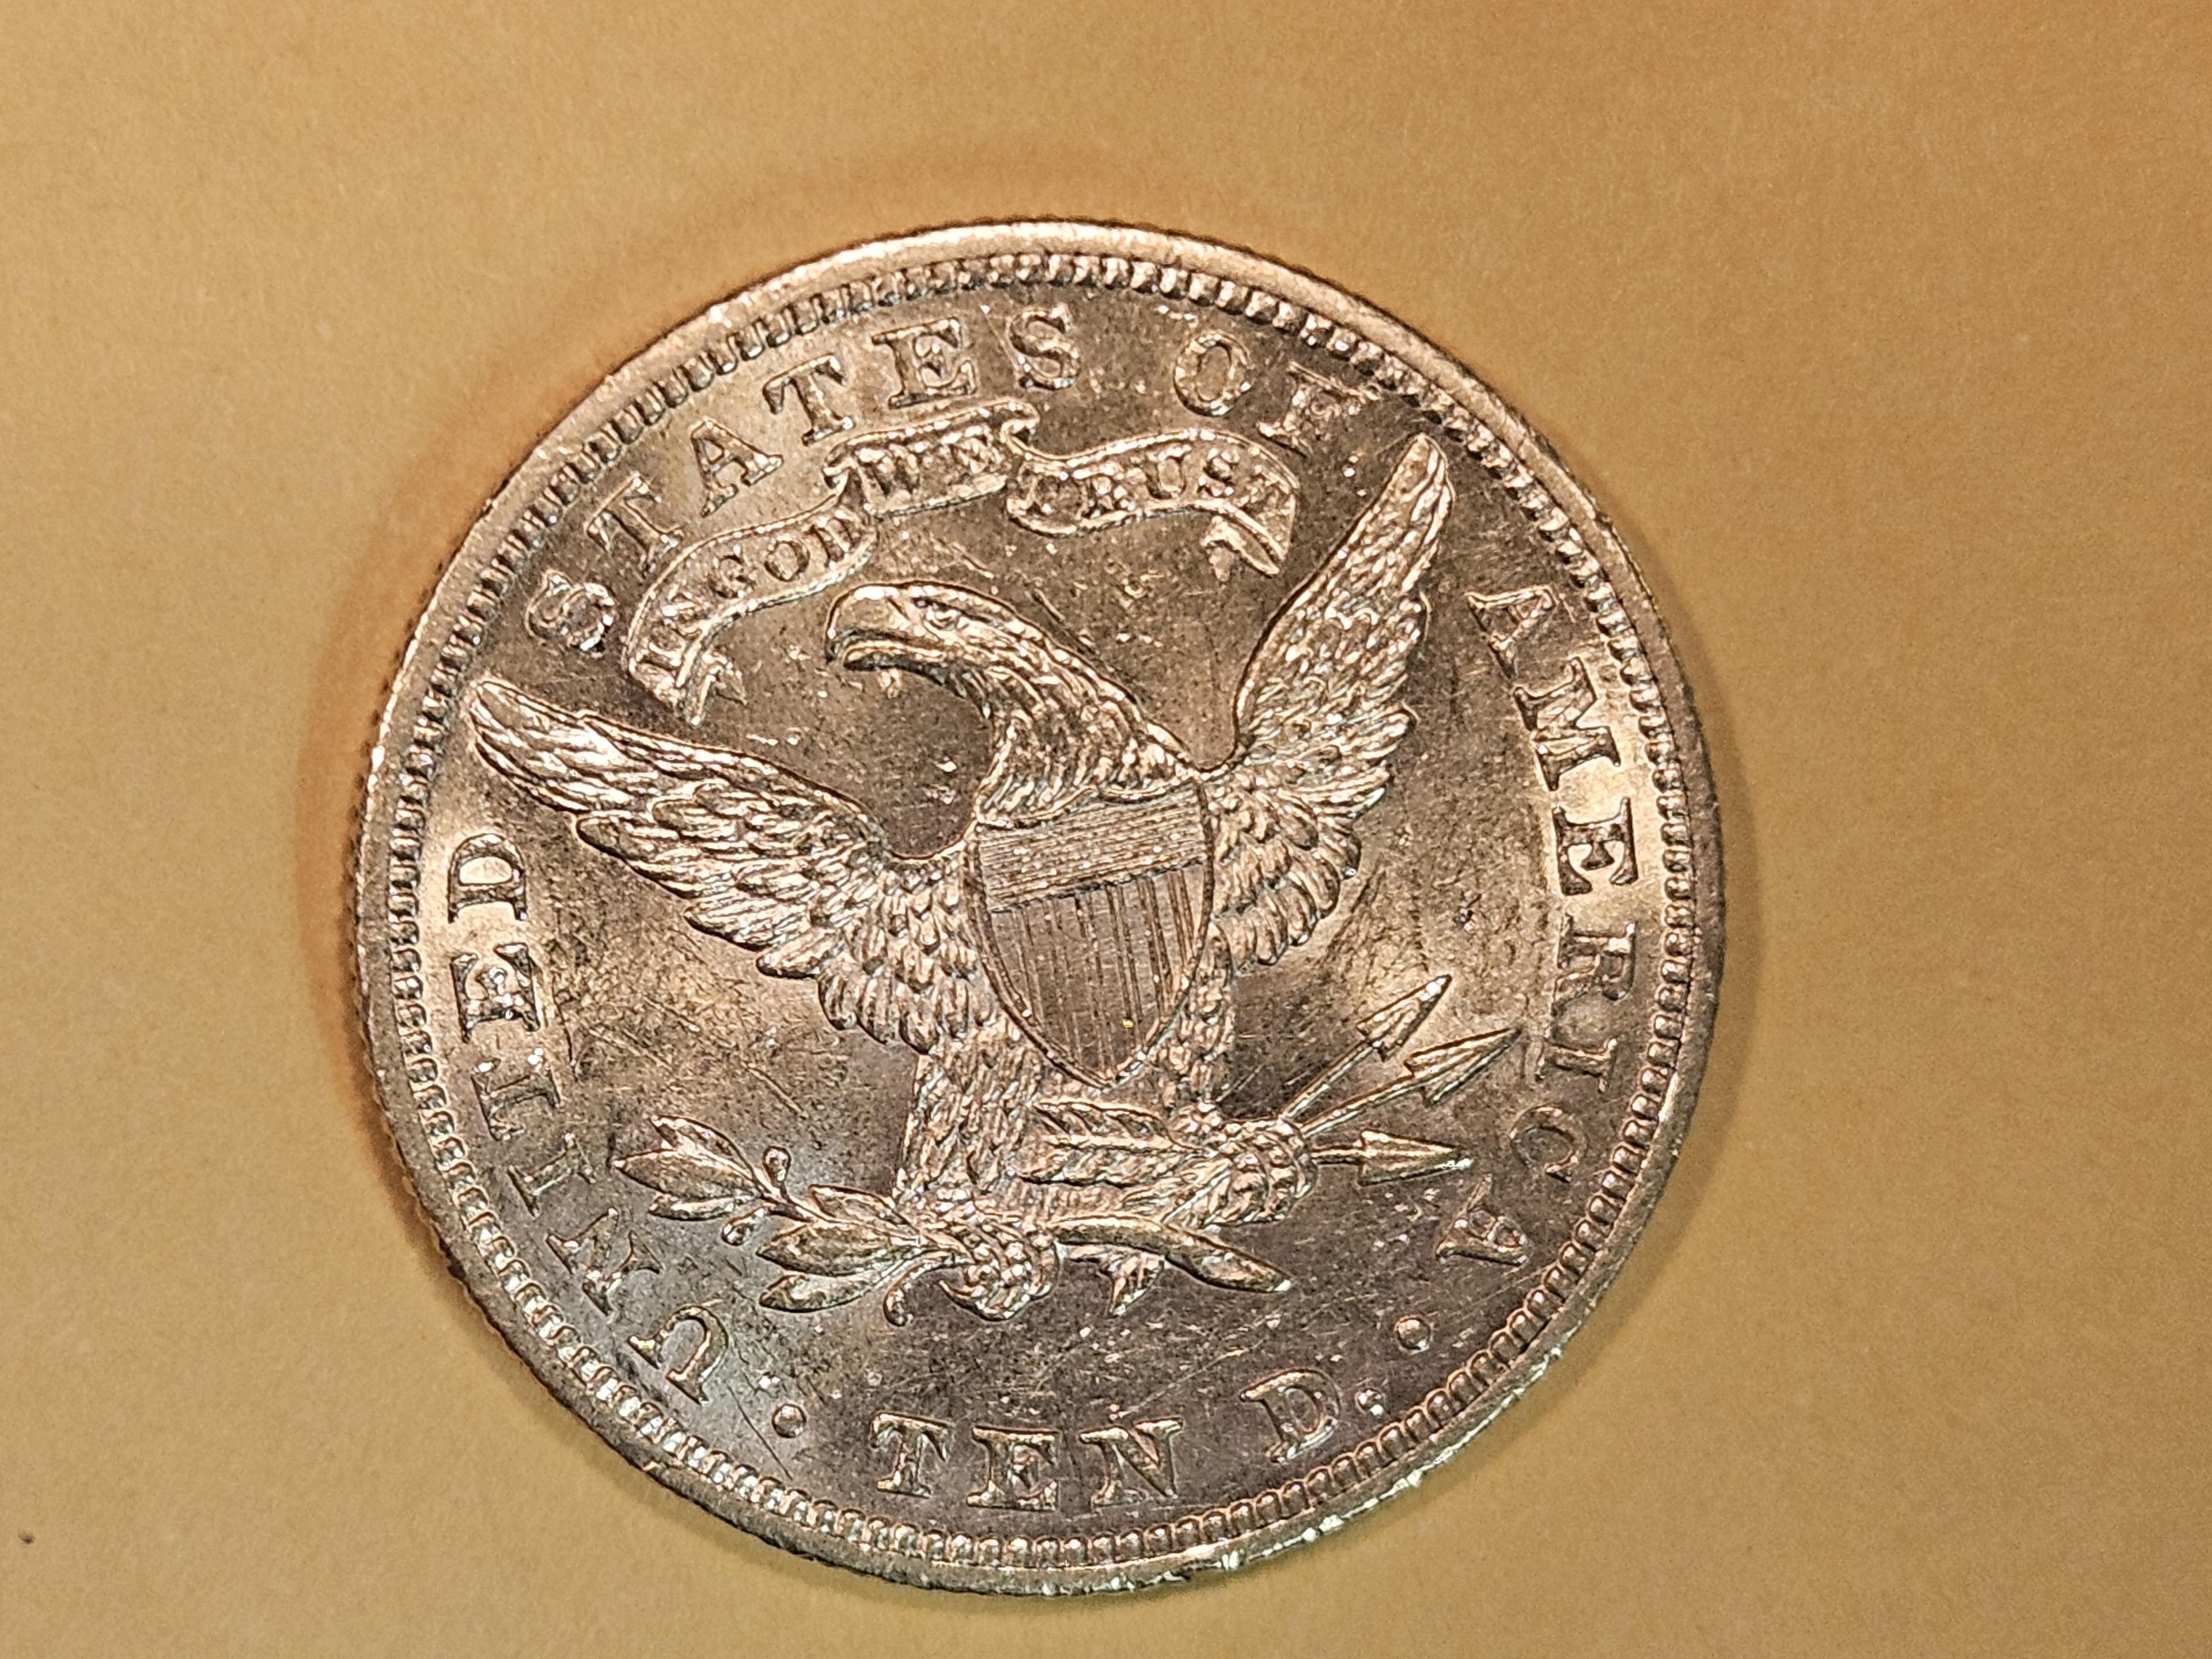 GOLD! Brilliant Uncirculated plus 1900 Liberty Head Gold Ten Dollars